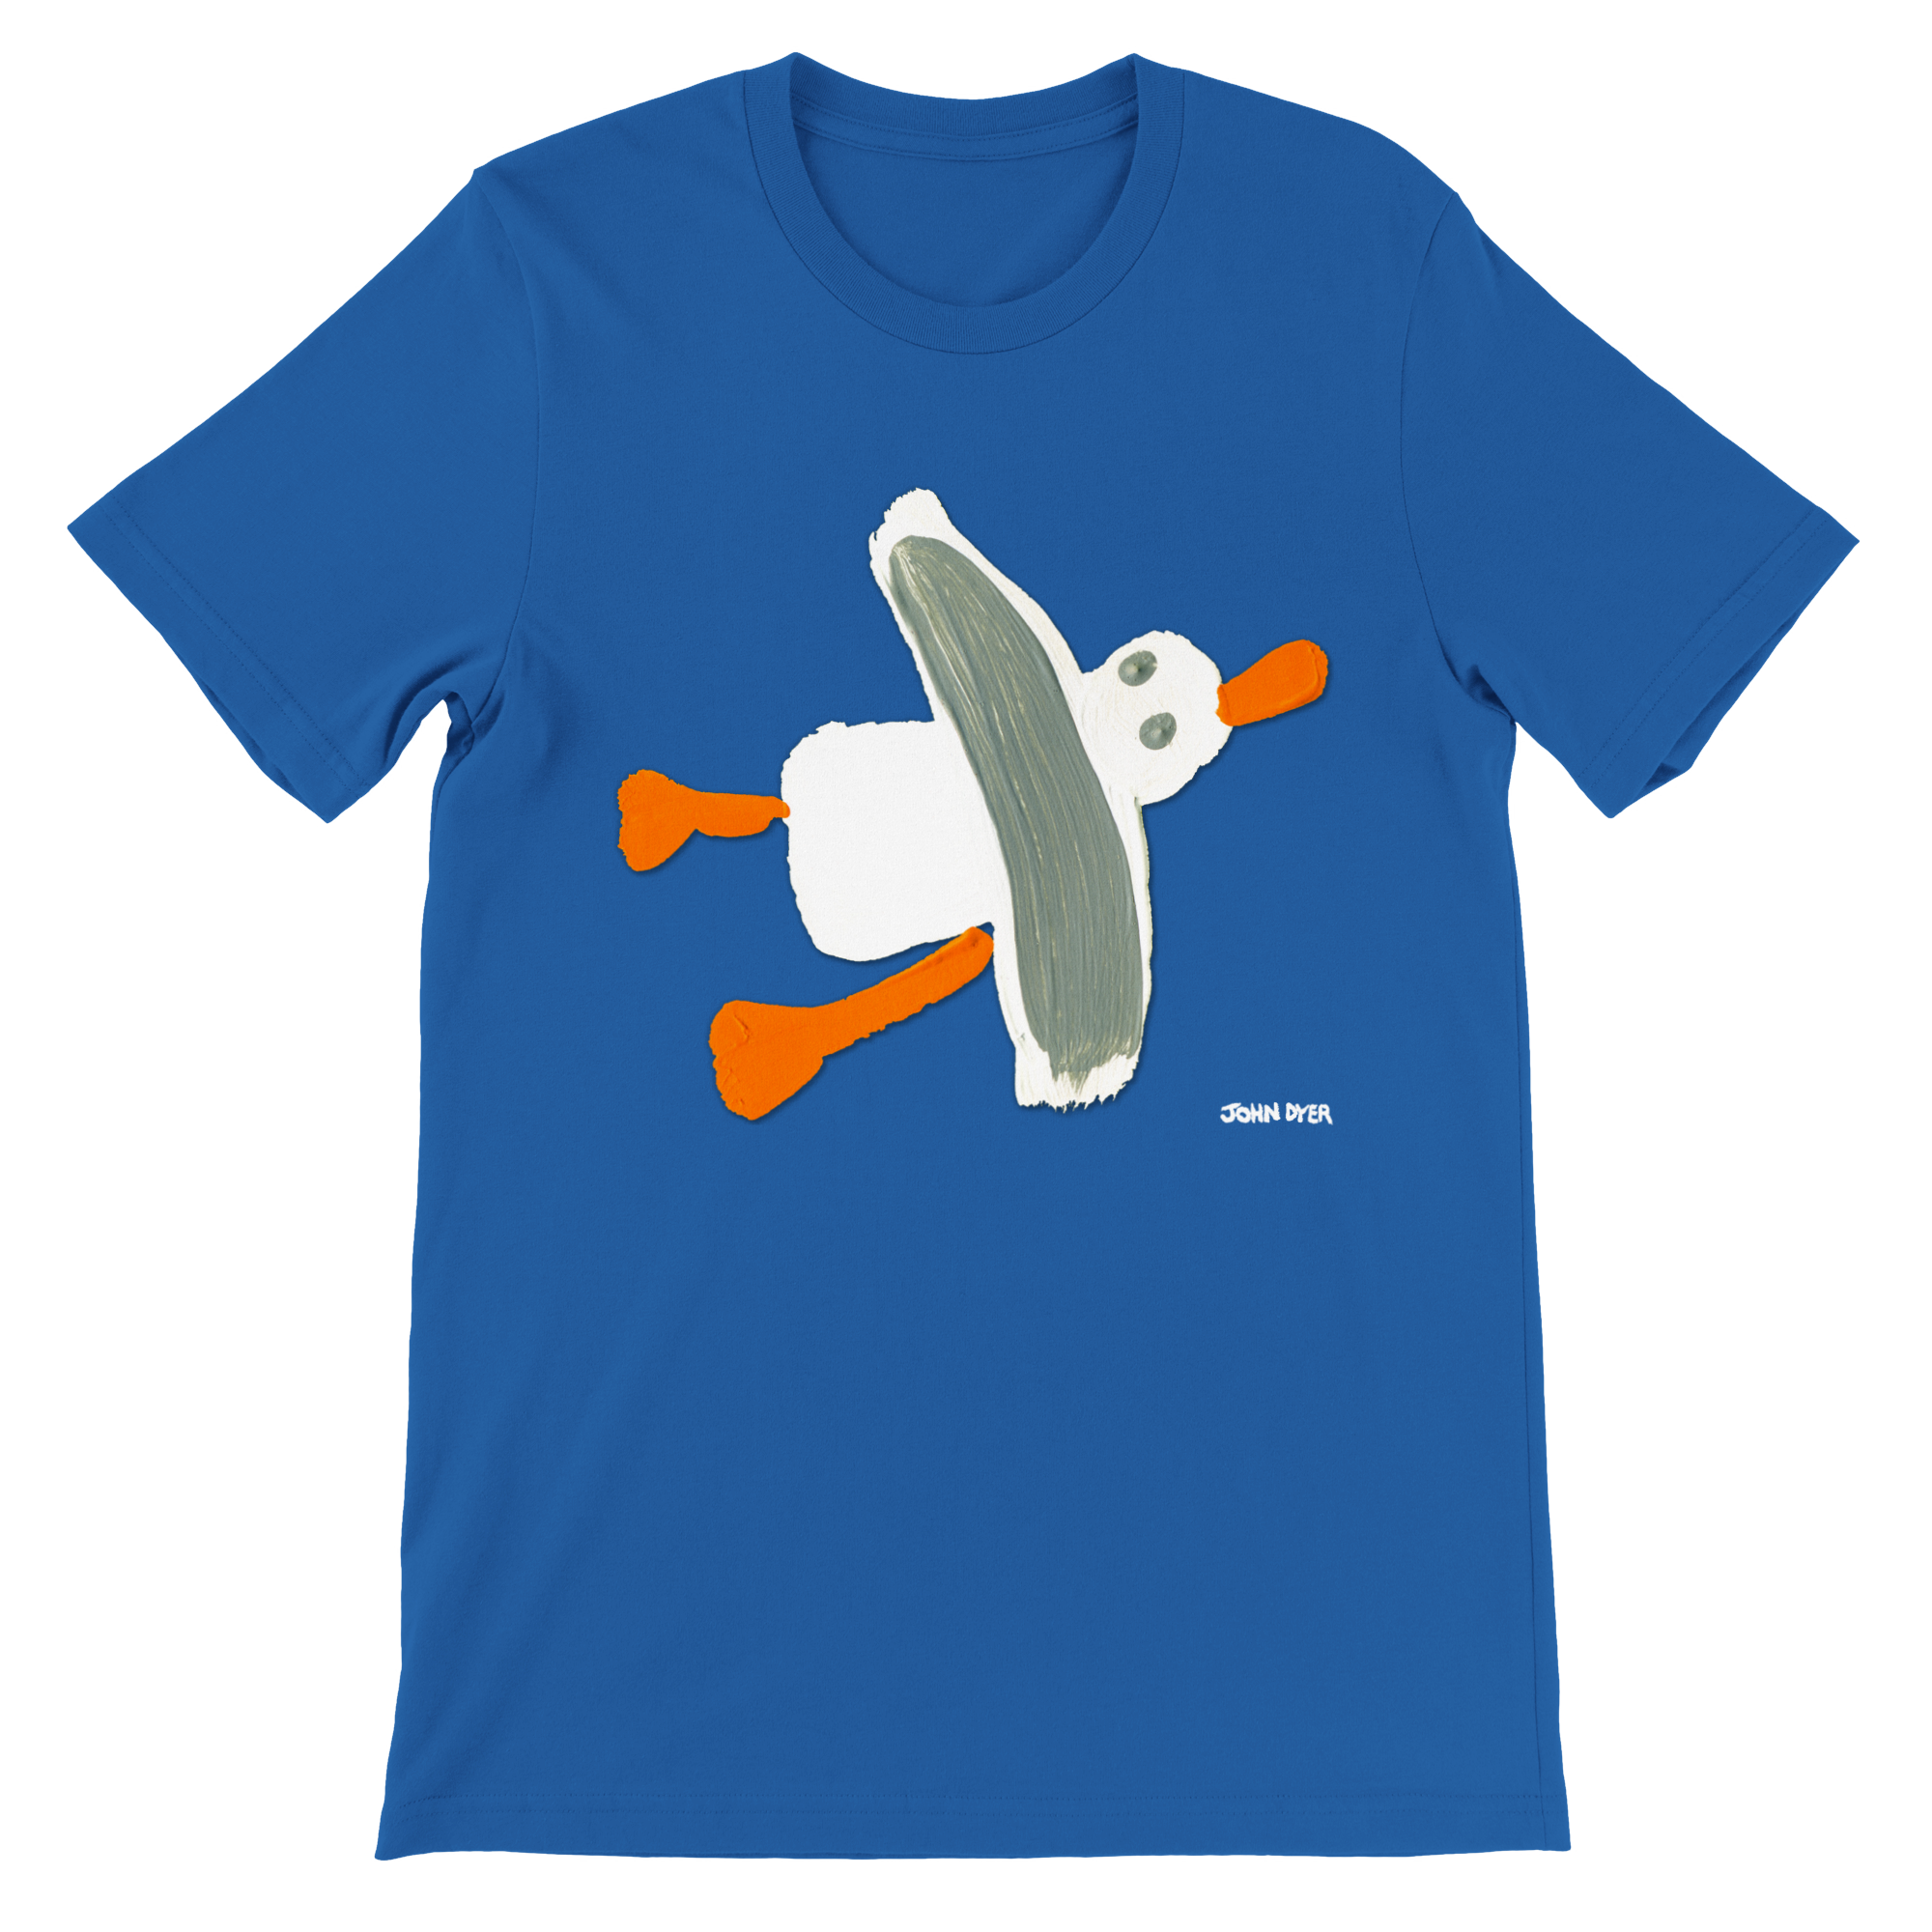 Blue Cornish seagull t-shirt by artist John Dyer. Cornwall beach wear..